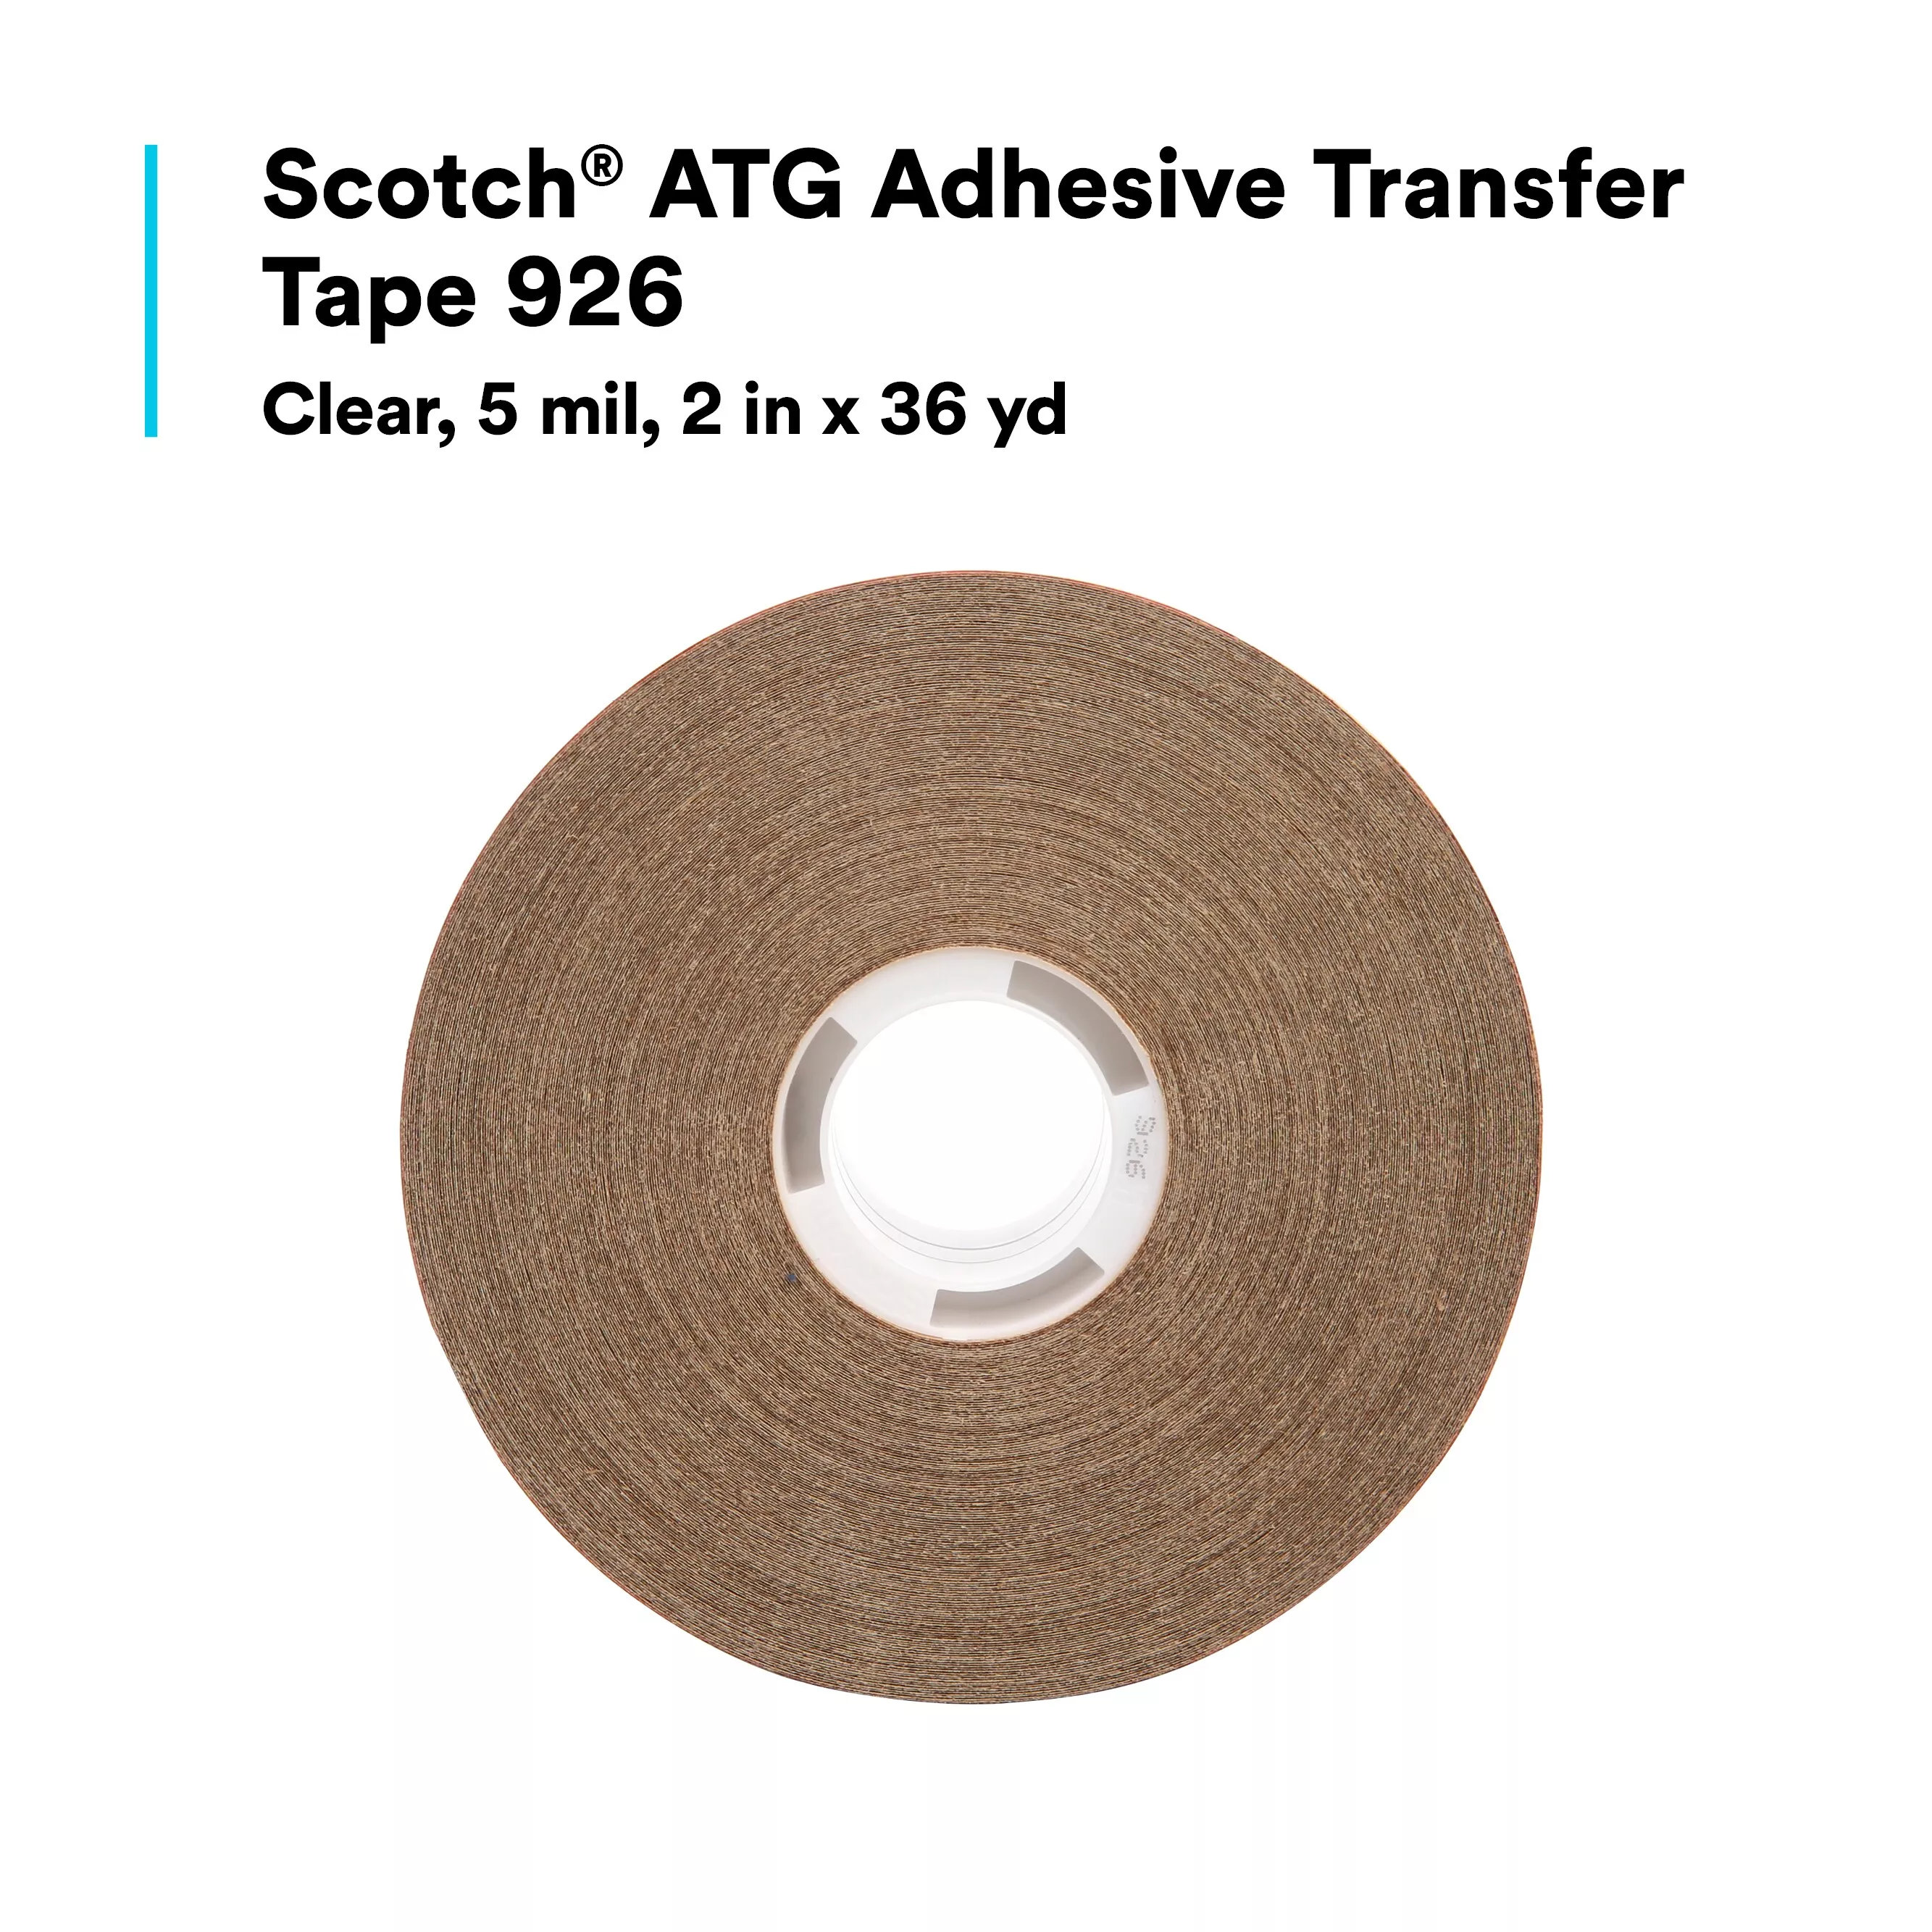 SKU 7000123359 | Scotch® ATG Adhesive Transfer Tape 926